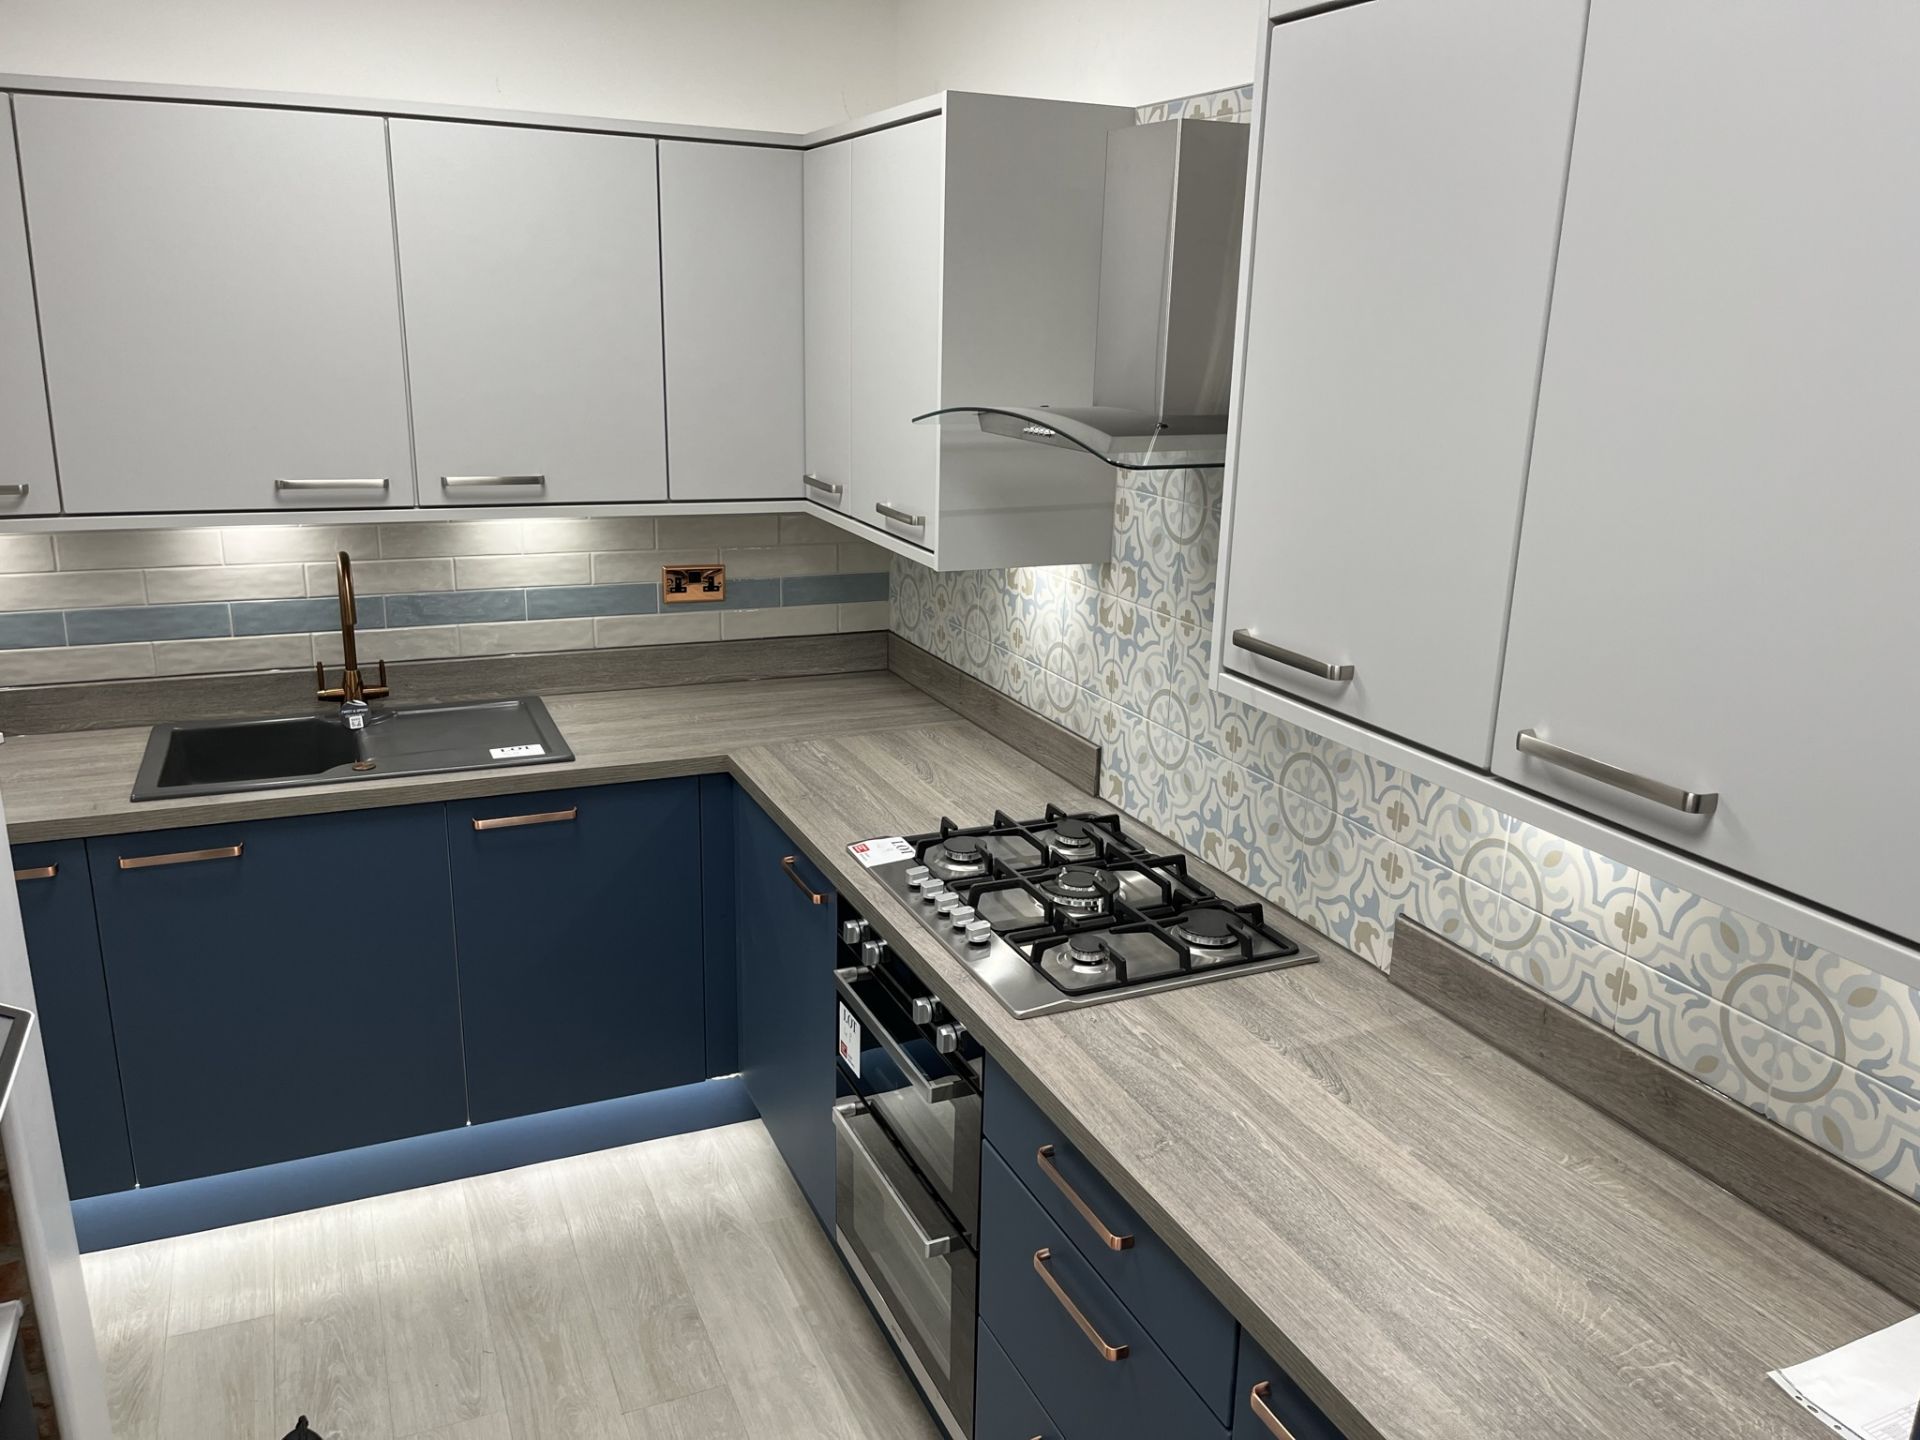 L shape laminate kitchen carcus with 11 cupboards, 4 drawers, laminate worktop, single basin sink - Bild 3 aus 4